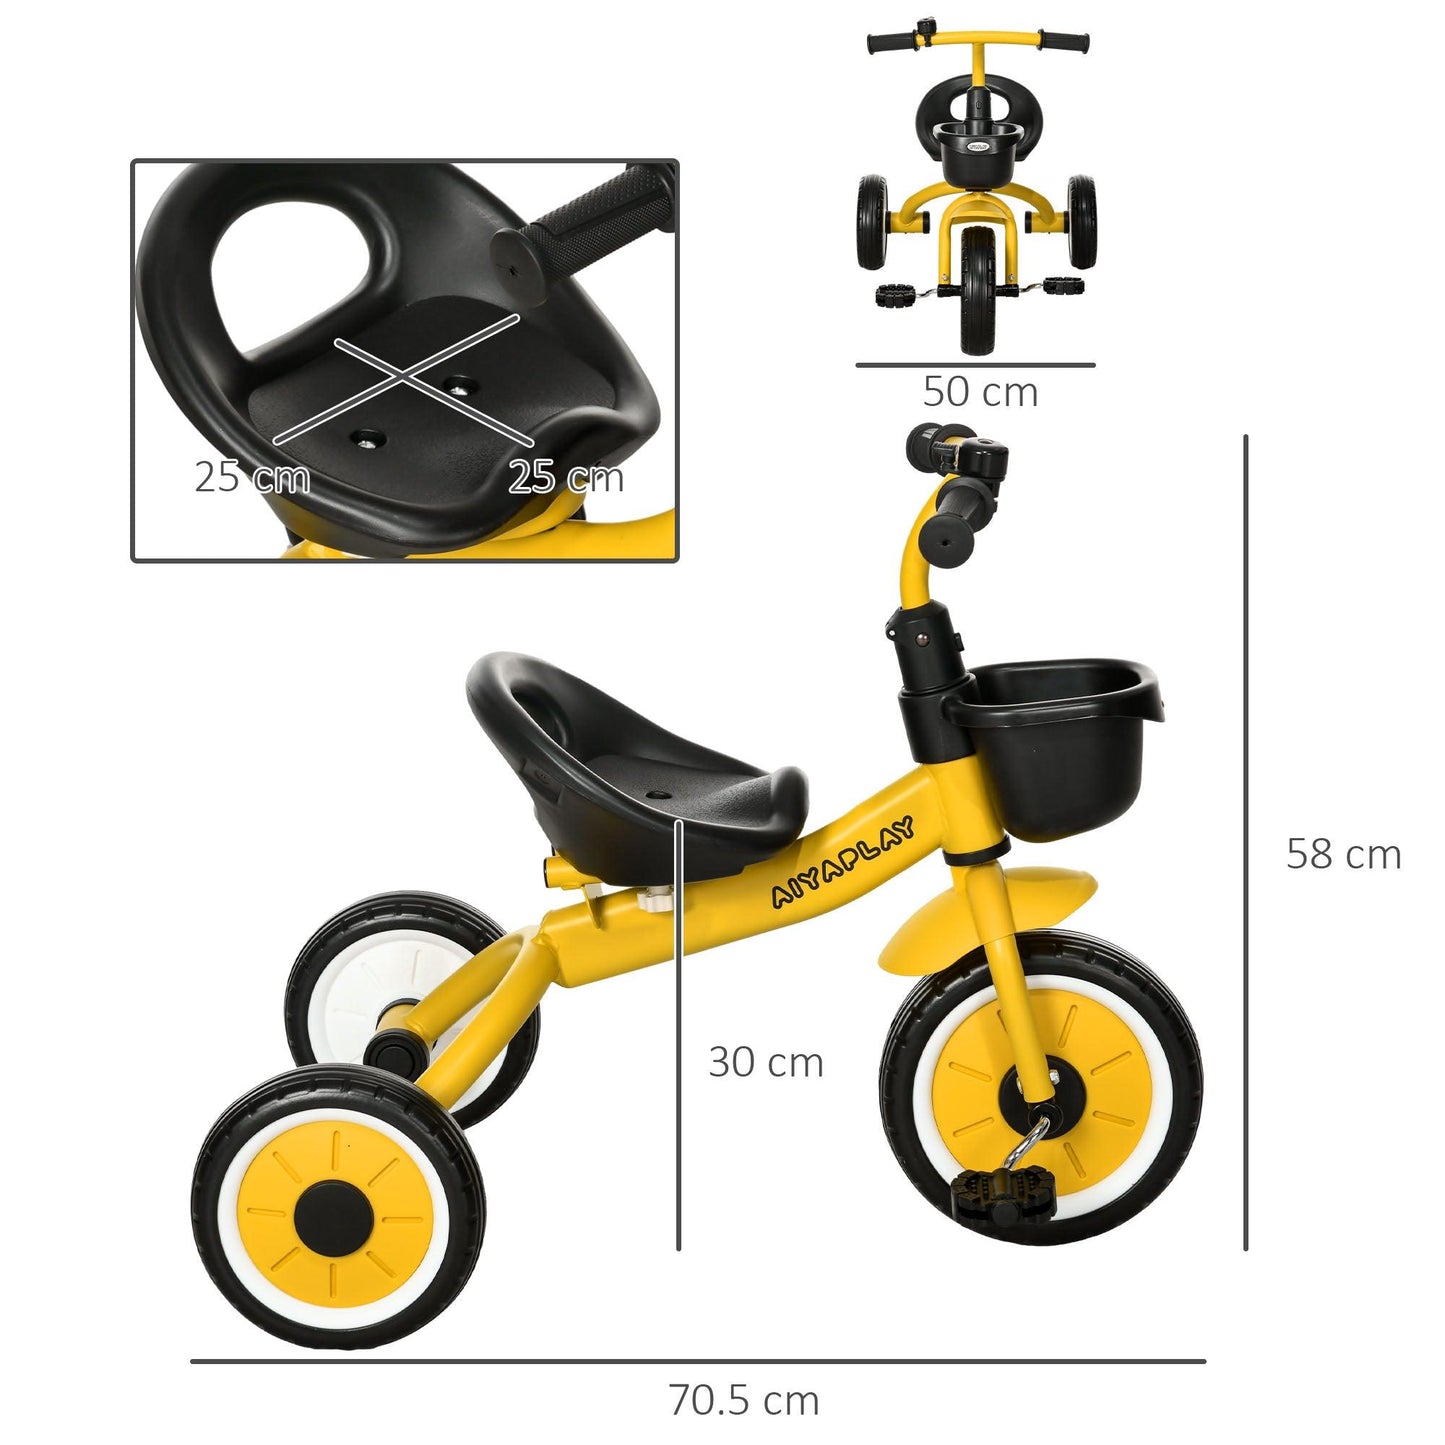 AIYAPLAY Yellow Kids Trike Tricycle, Adjustable Seat, Basket, Bell - Ages 2-5 - ALL4U RETAILER LTD